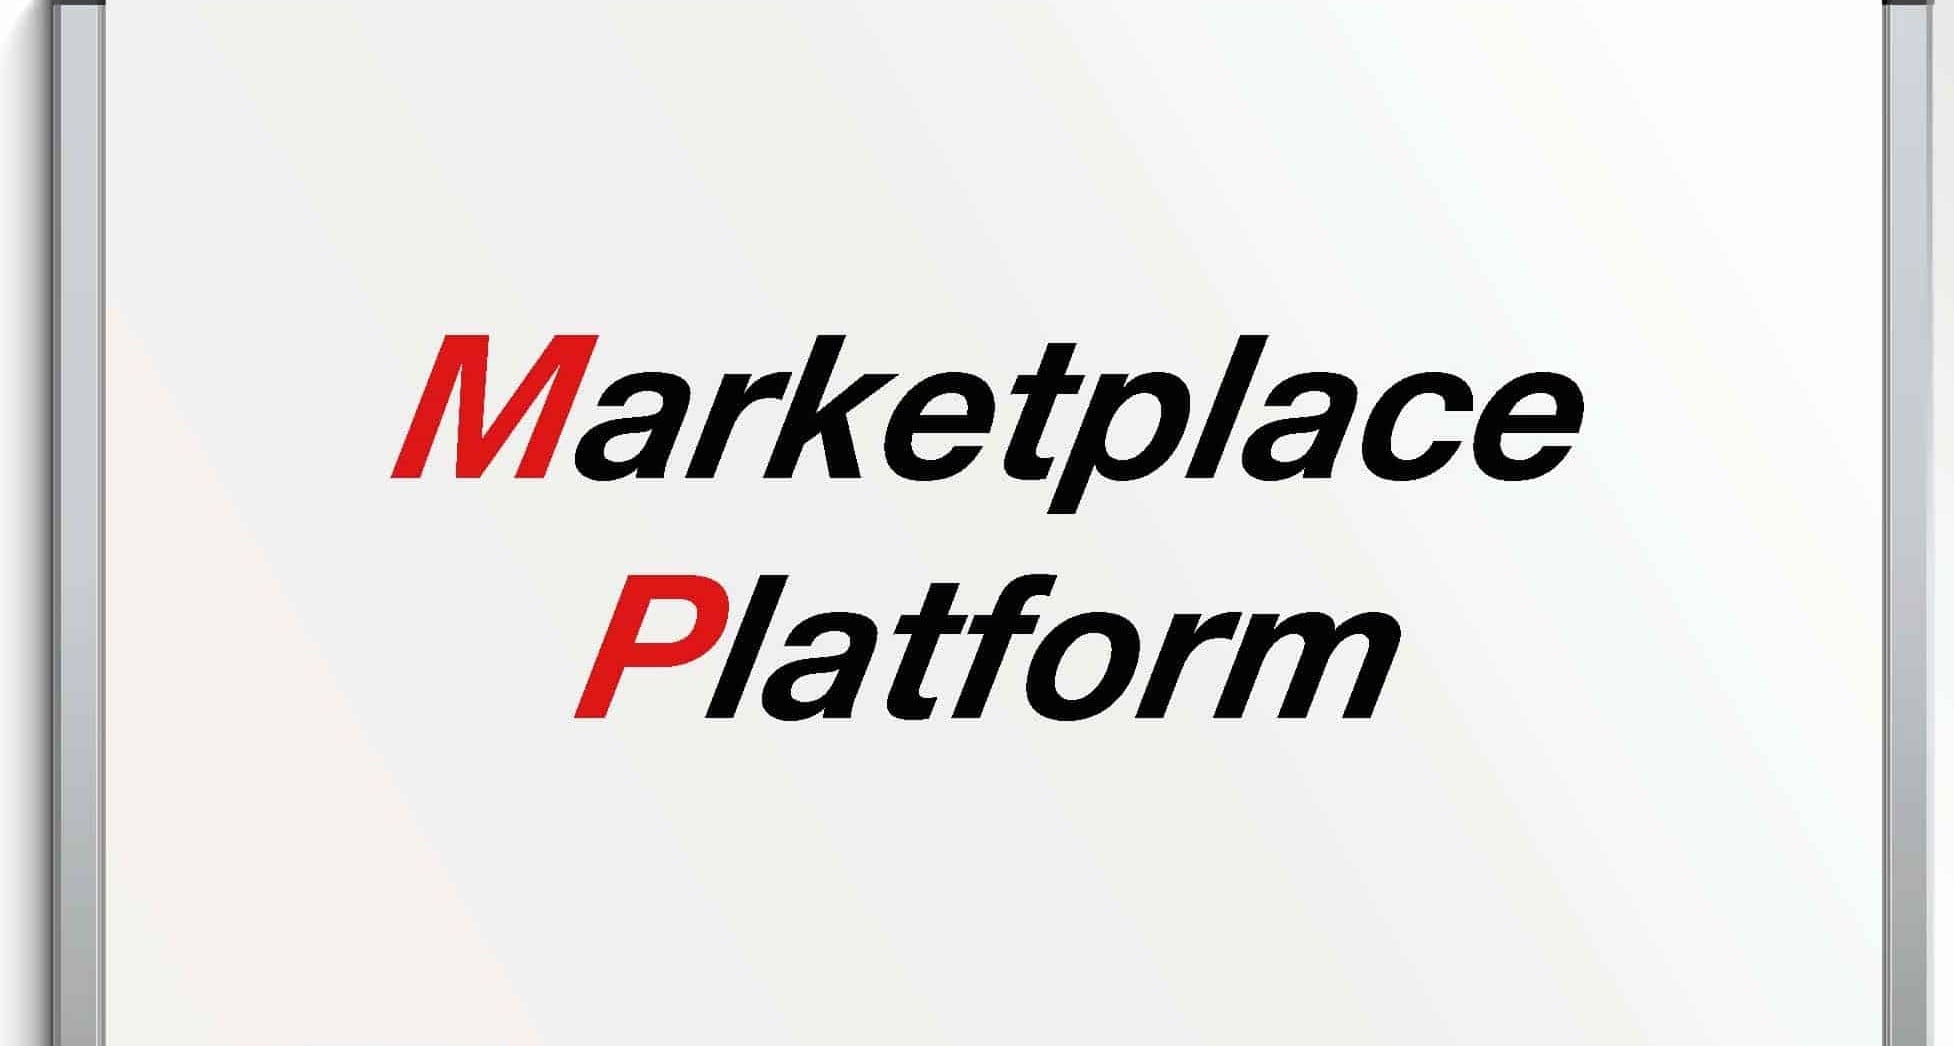 Marketplace-platform